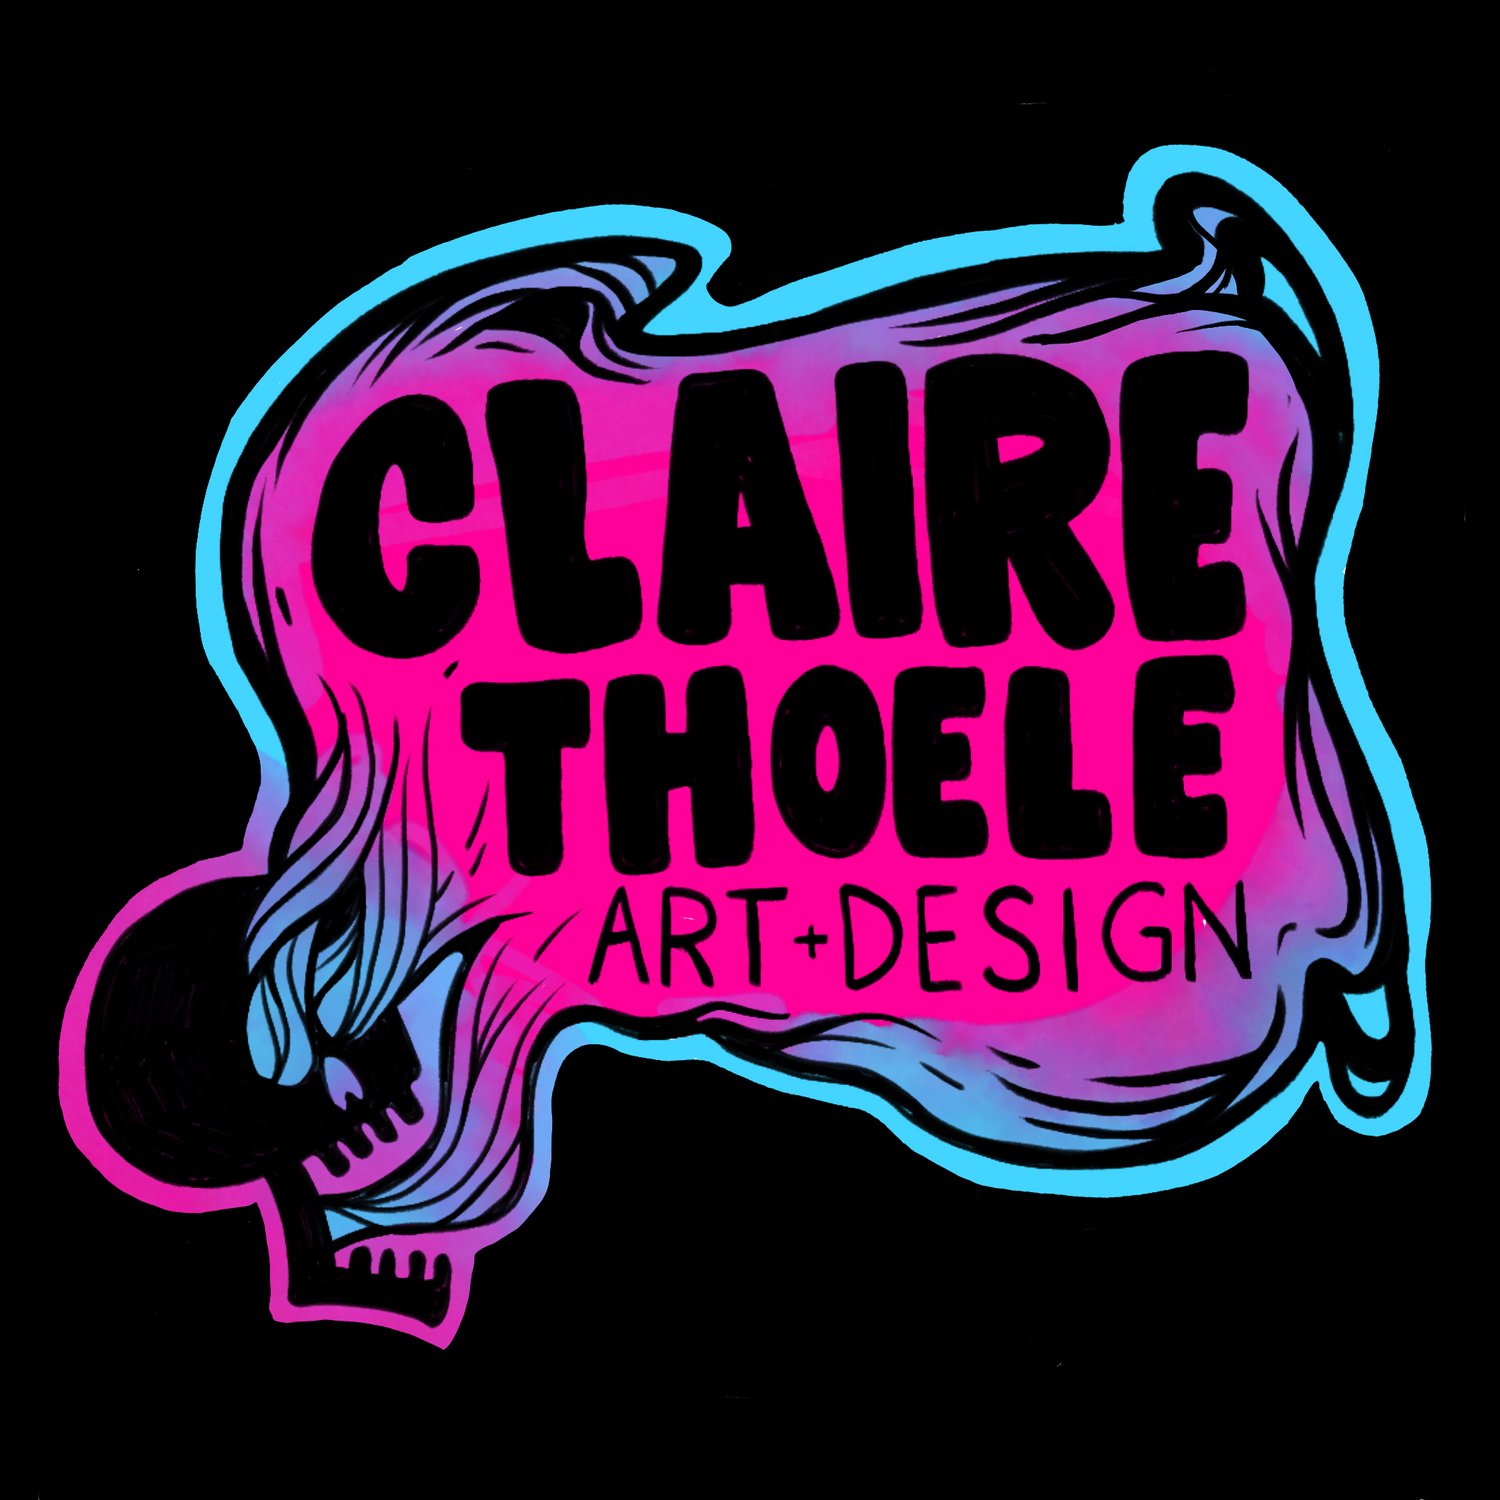 Claire Thoele